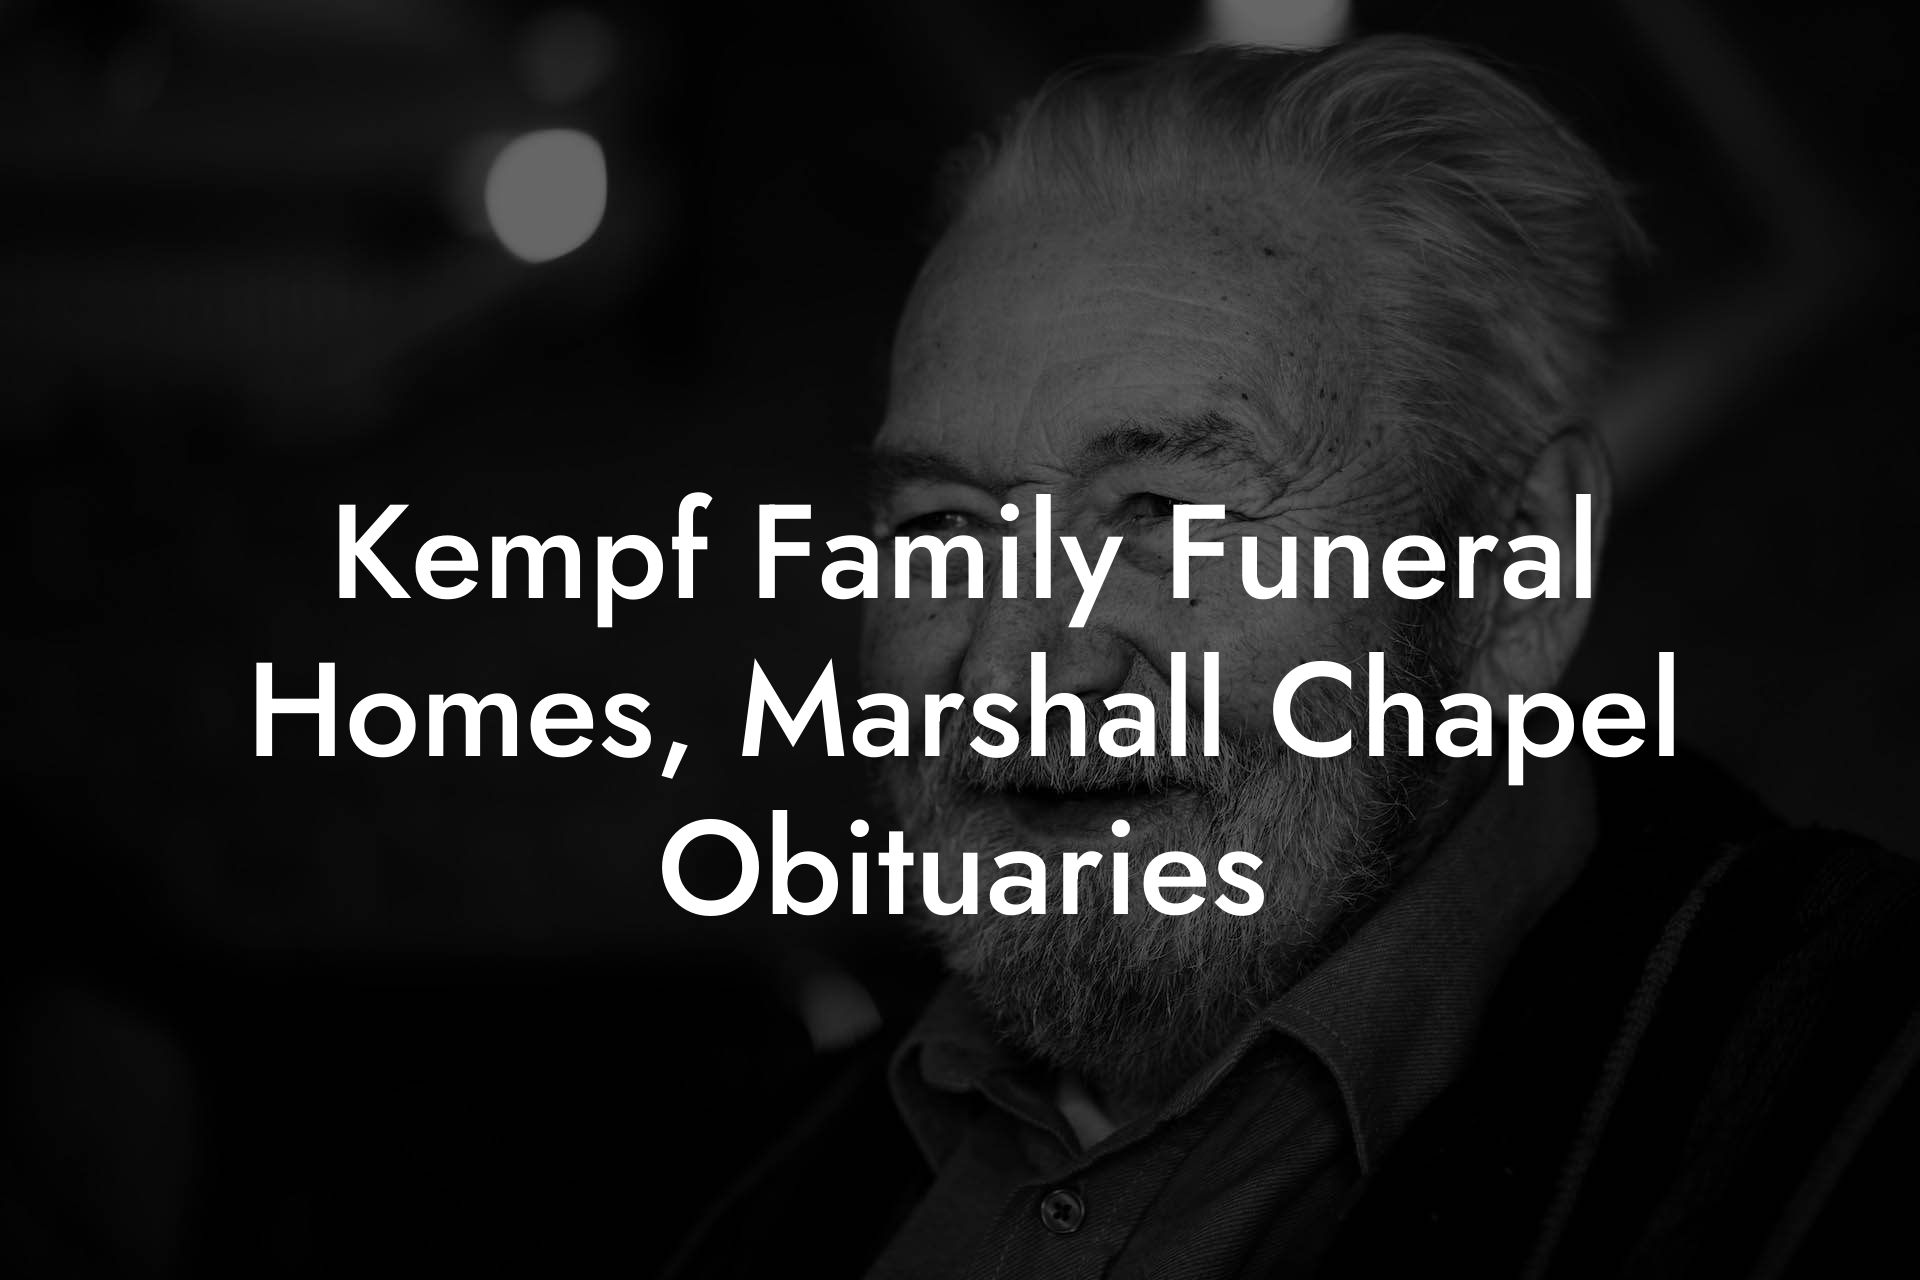 Kempf Family Funeral Homes, Marshall Chapel Obituaries